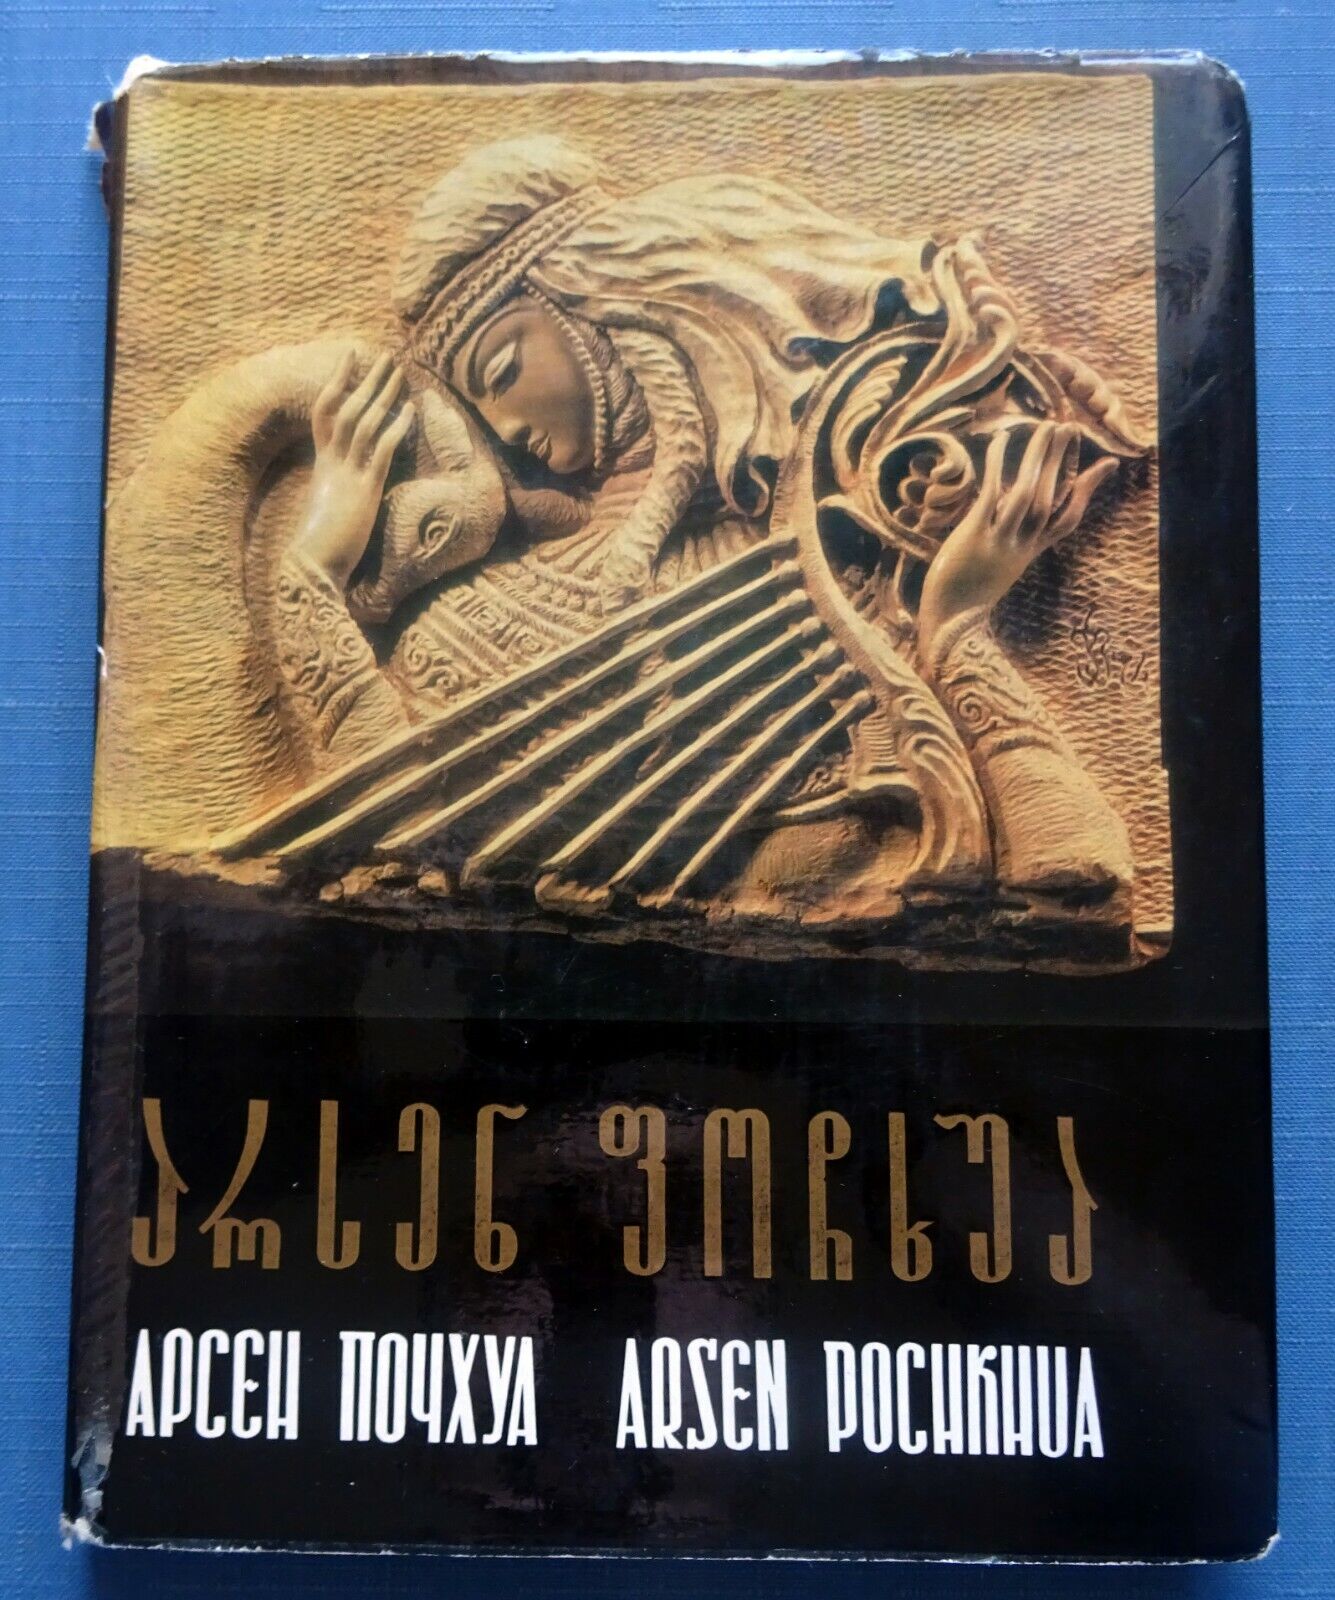 1976 Box-Wood Carving Arsen Pochkhua Art Georgian Russian Soviet Book Tbilisi